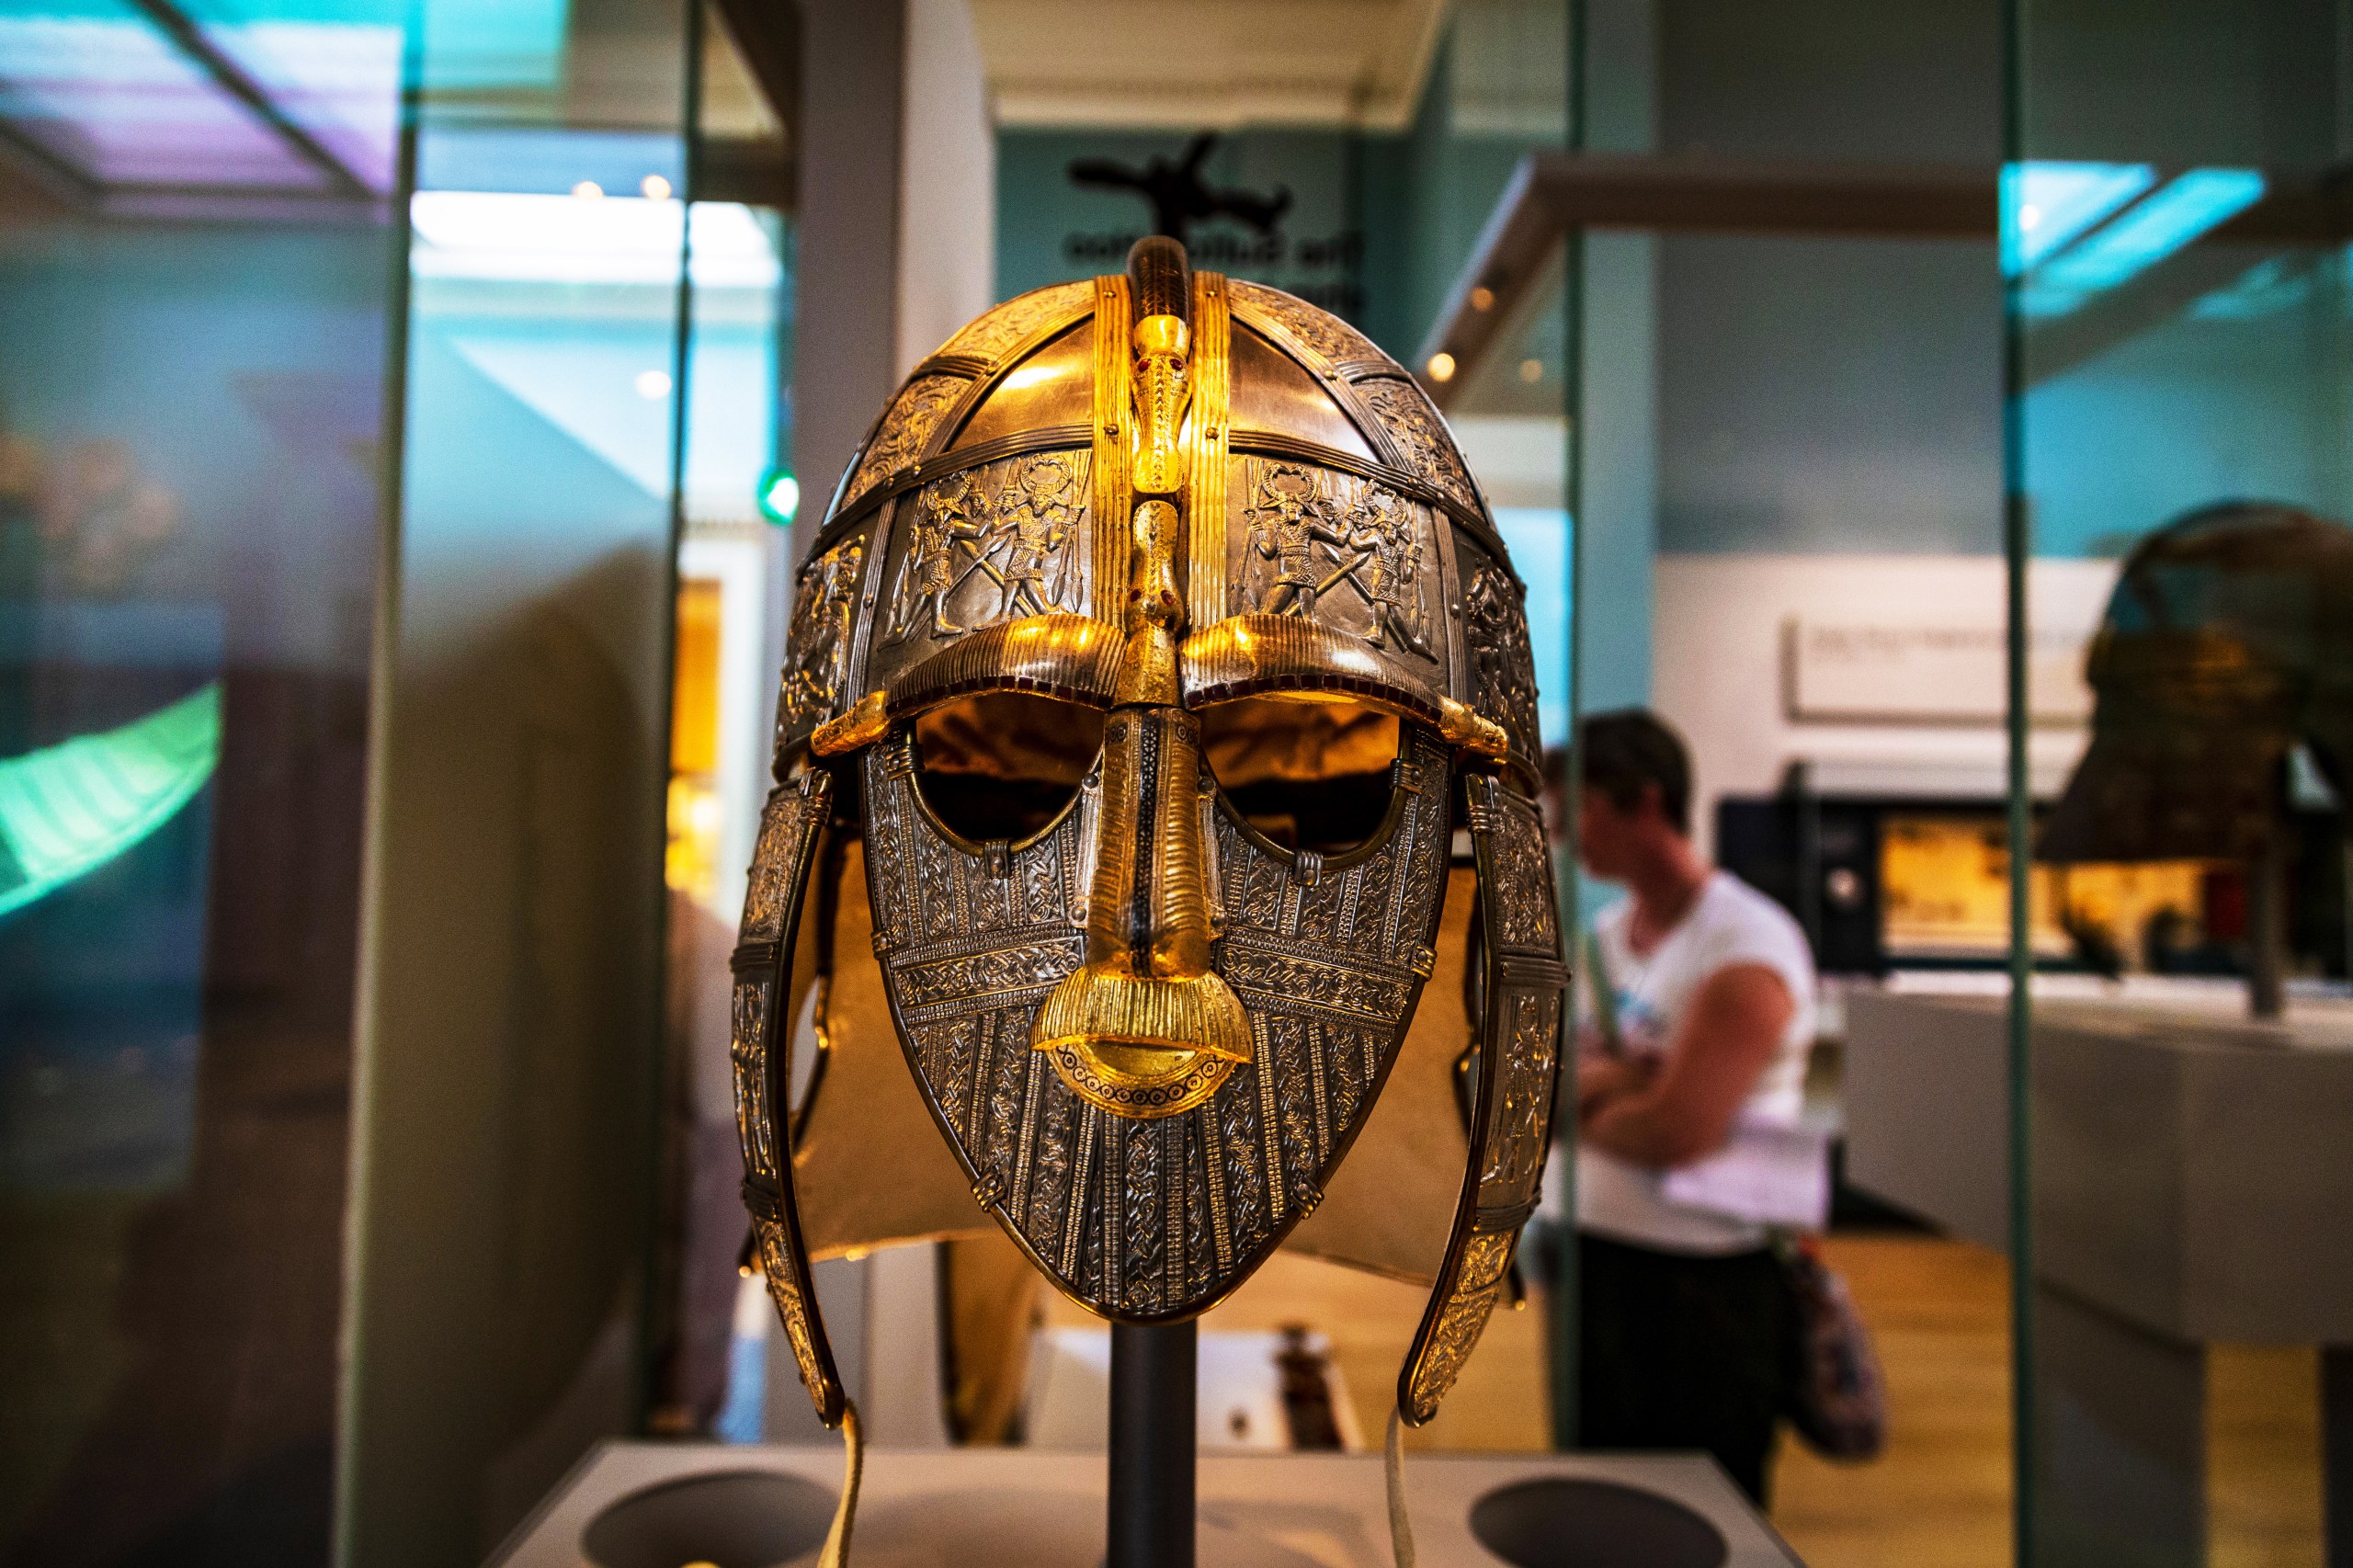 The Sutton Hoo helmet in the British Museum